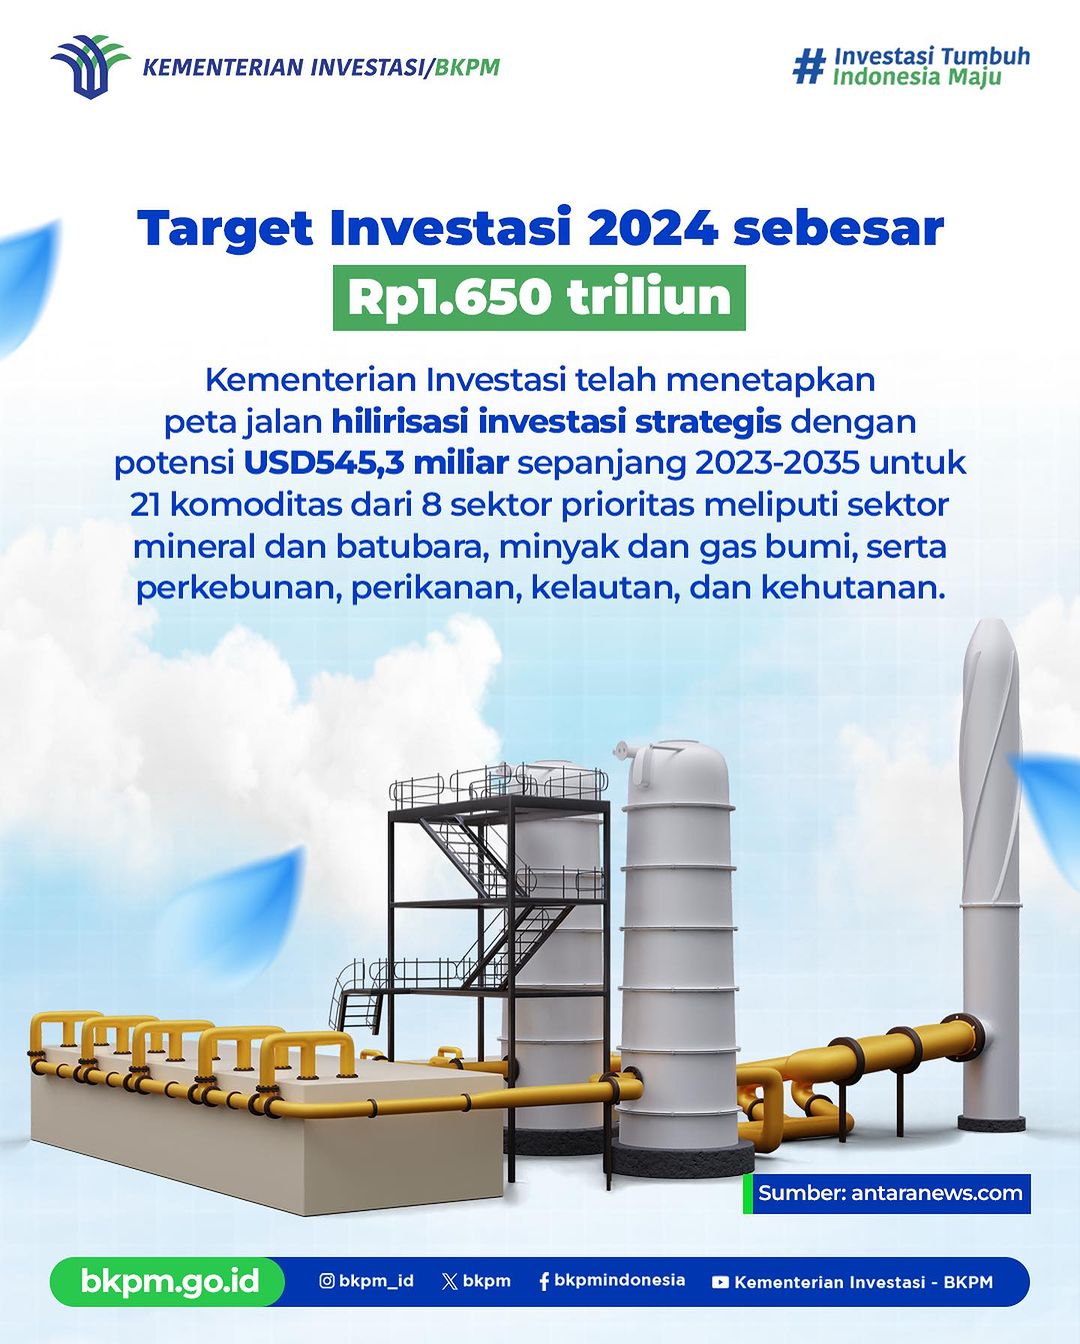 Hirilisasi Kunci Tercapainya Target Investasi 2024